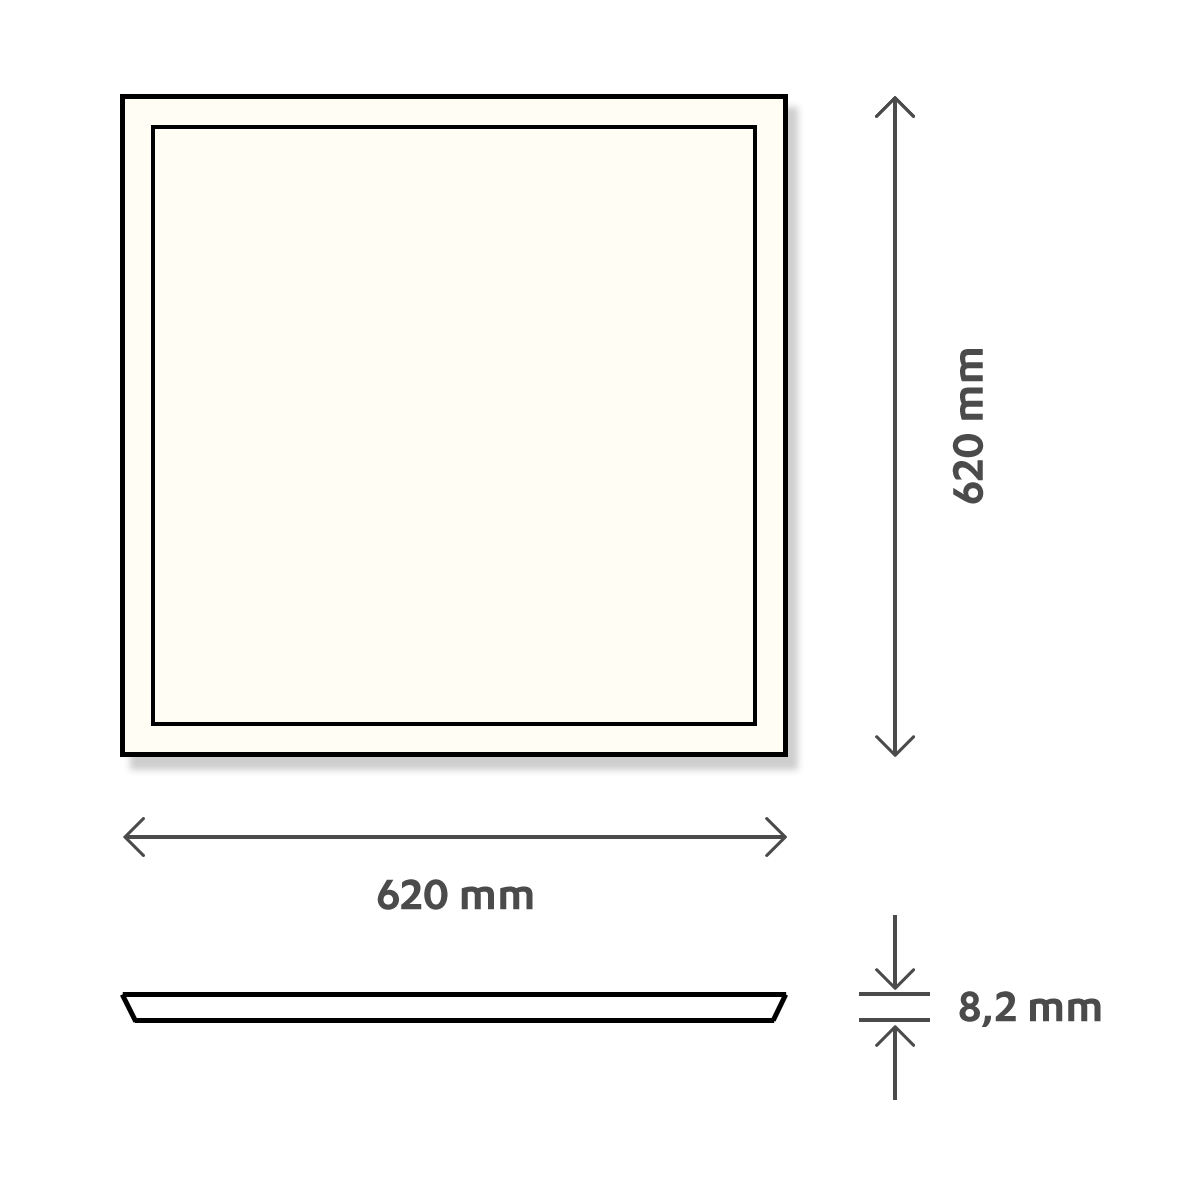 LED Panel Deckenleuchte 620x620 micro prism